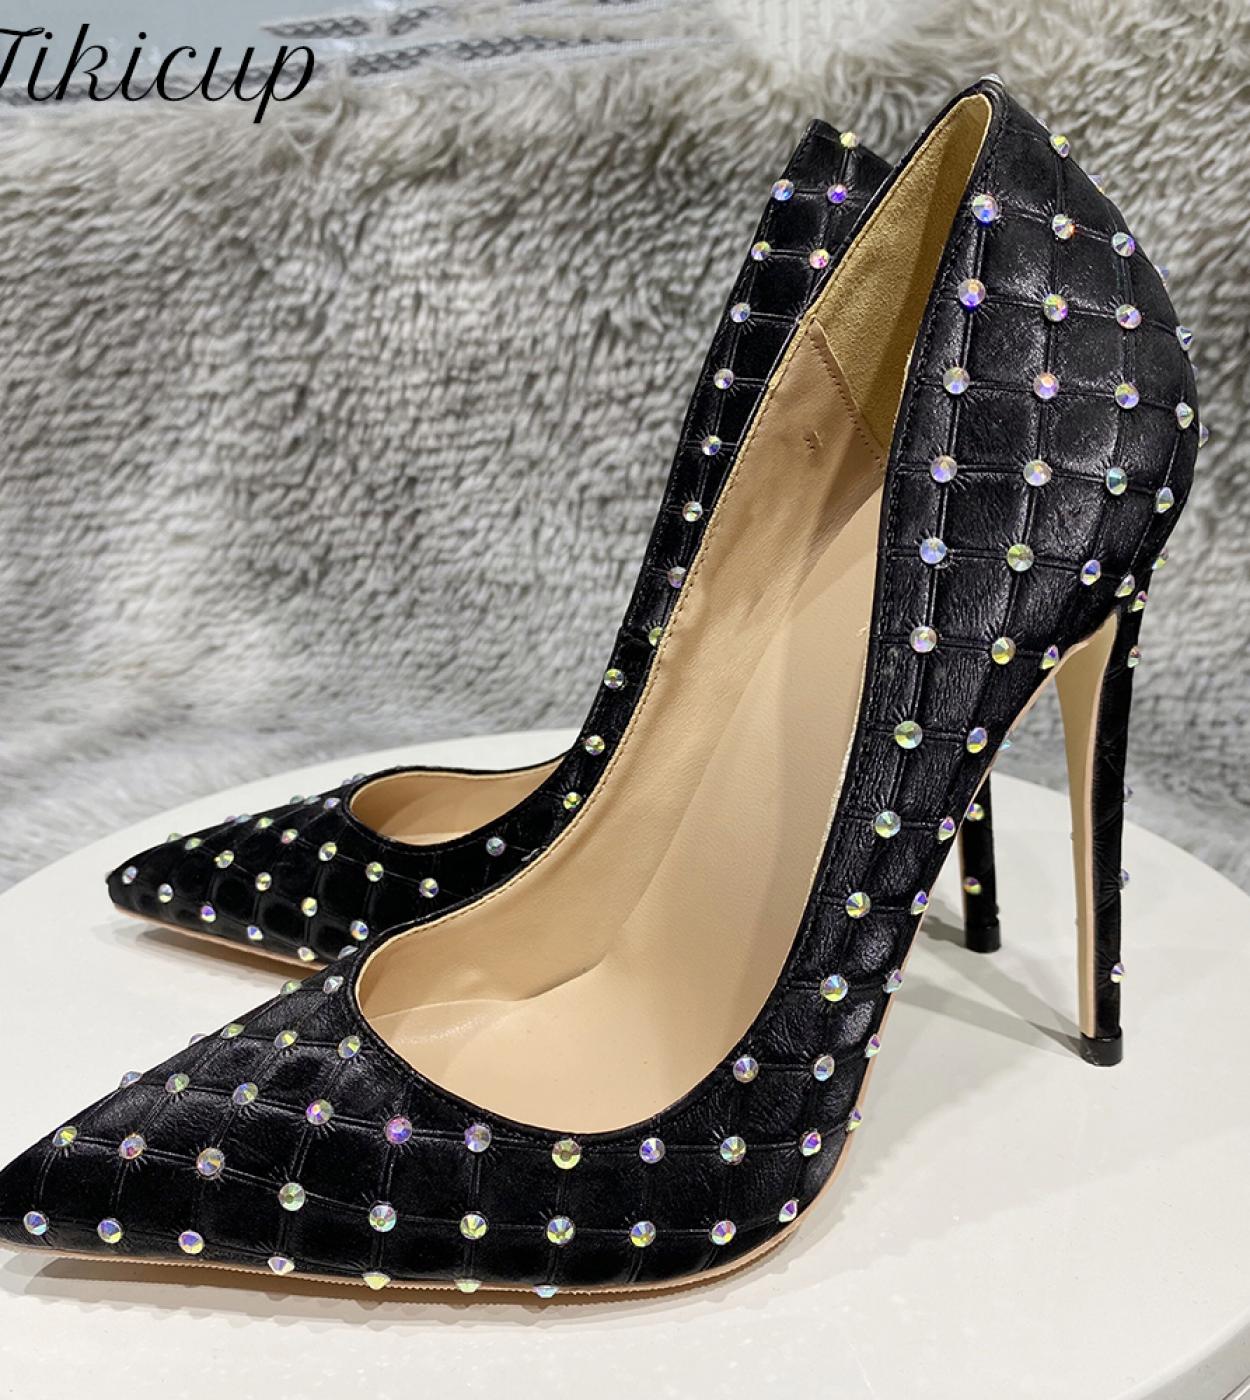 Tikicup Rhinestones Women Black Plaid Fabric Pointy Toe High Heel Shoes Stunning Party Stiletto Pumps 8cm 10cm 12cm Cust